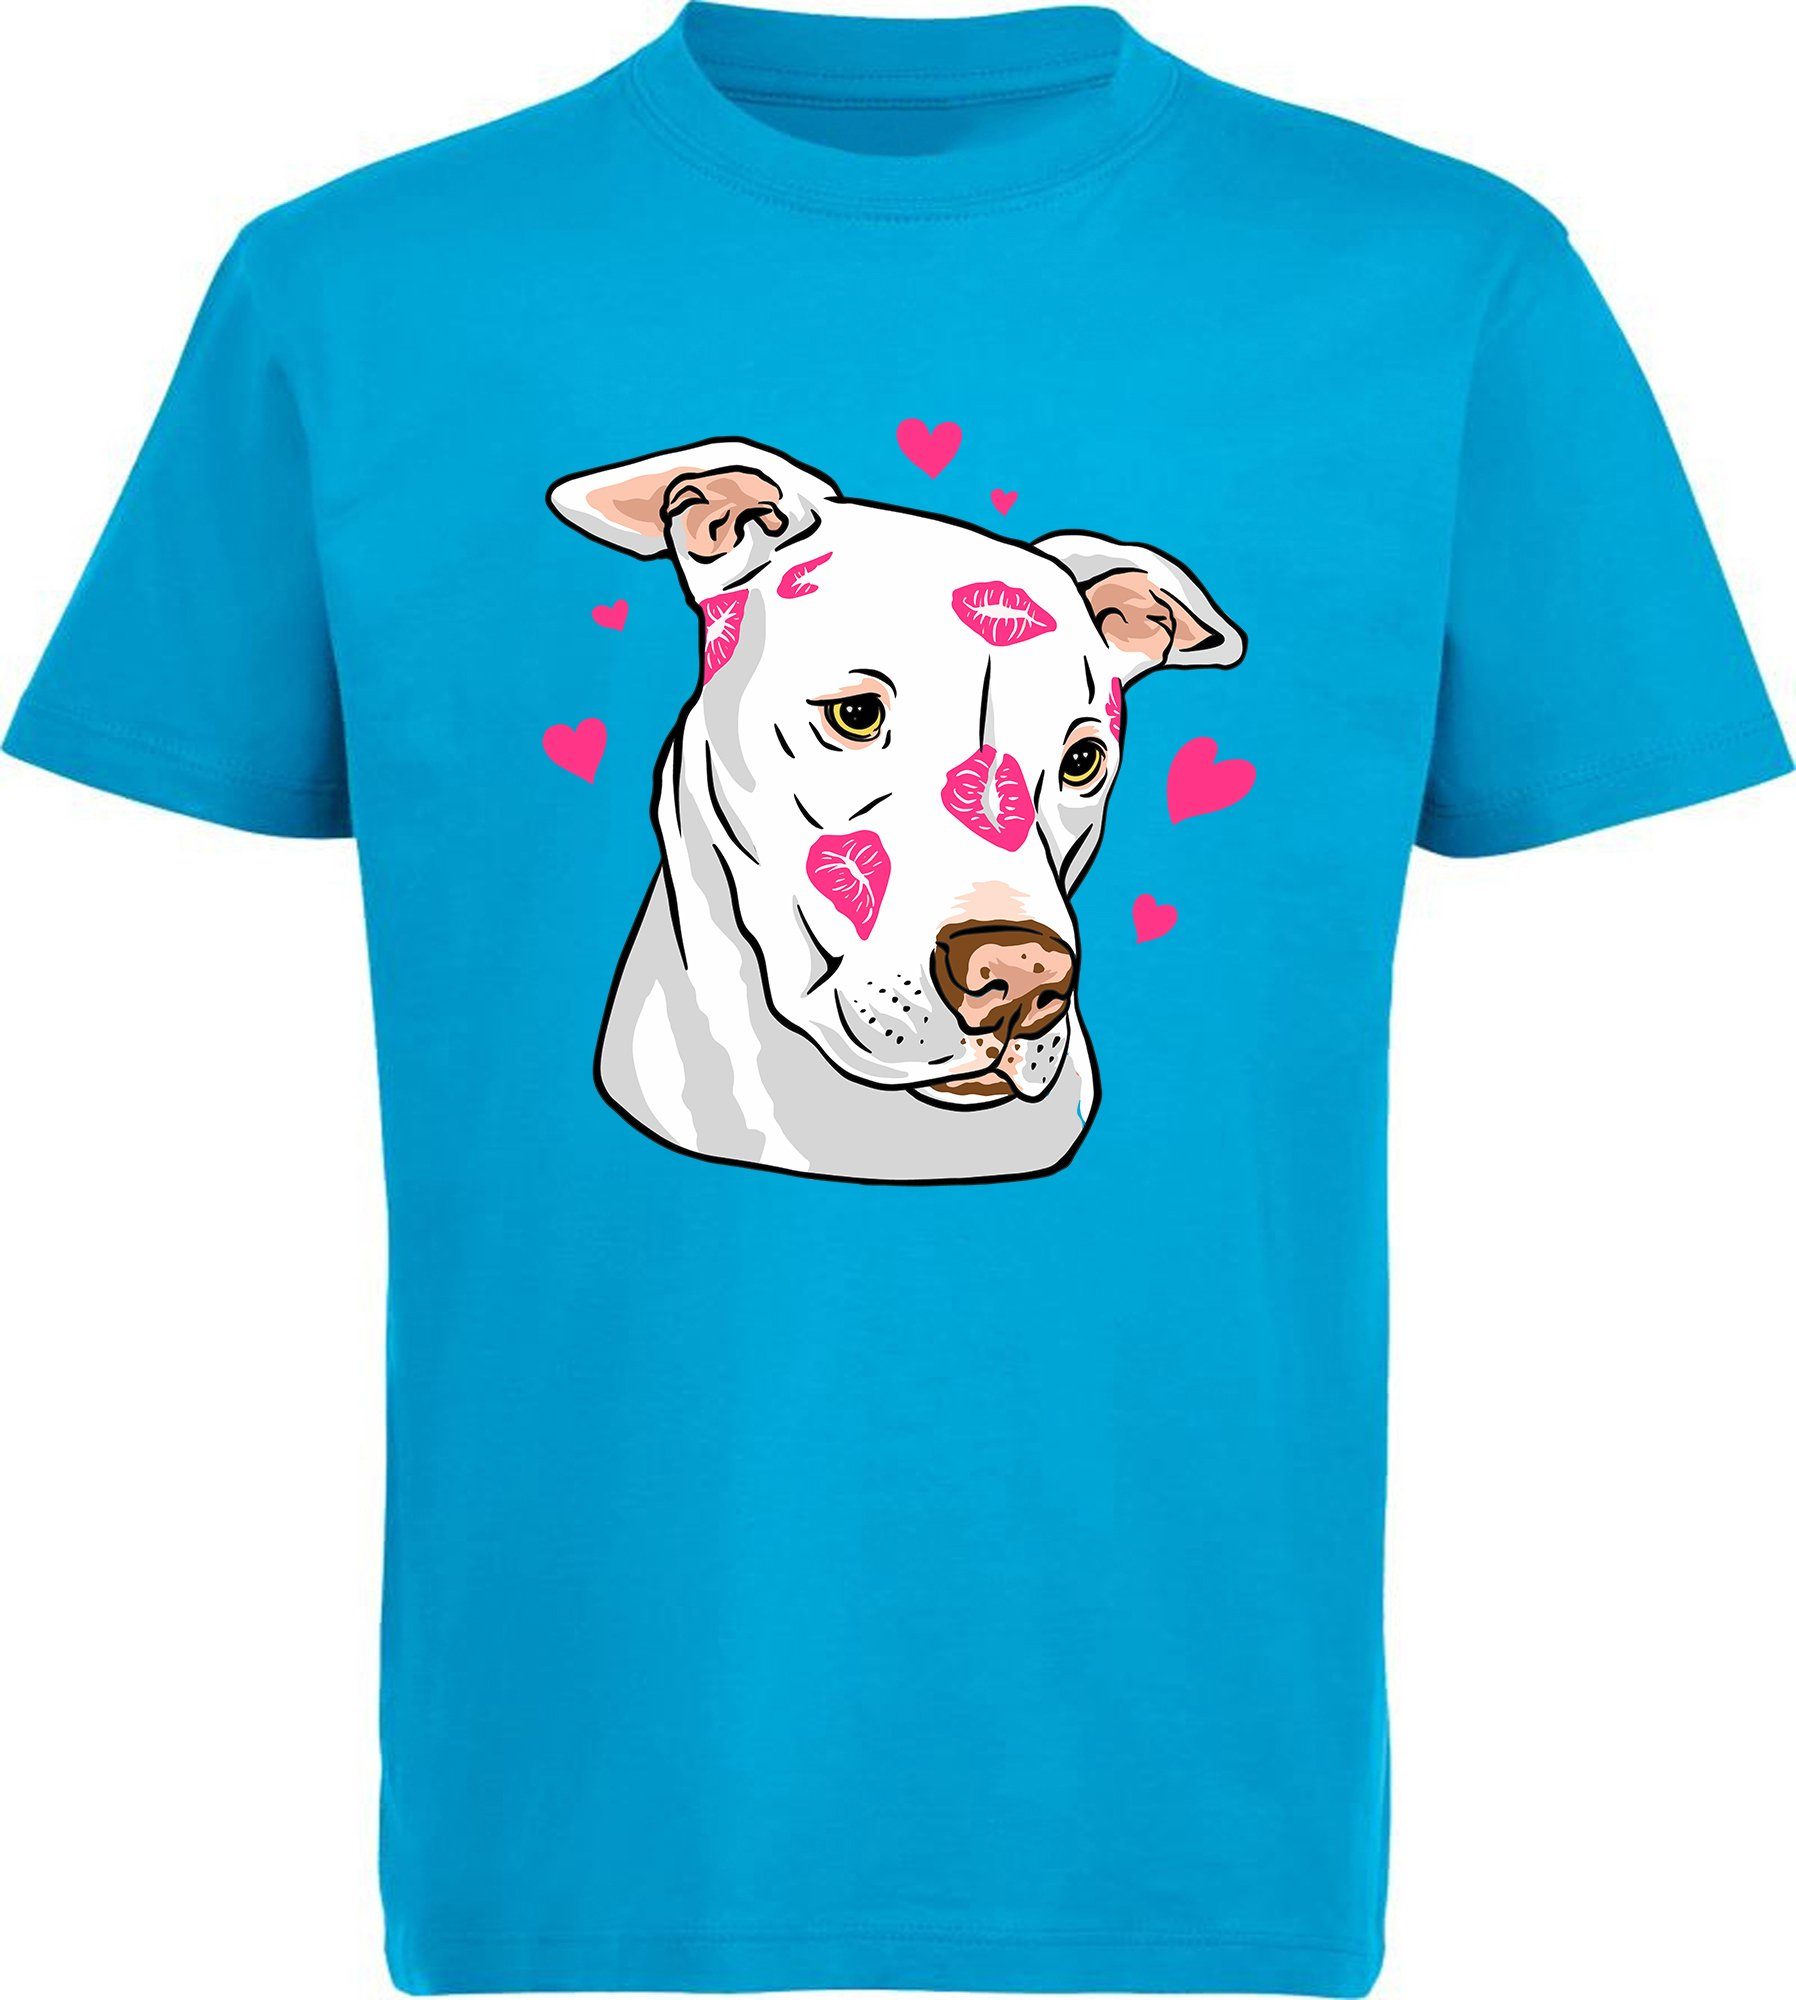 Pitbull MyDesign24 i229 aqua Baumwollshirt Aufdruck, Kinder Hunde bedrucktes - T-Shirt Herzen Print-Shirt mit mit blau